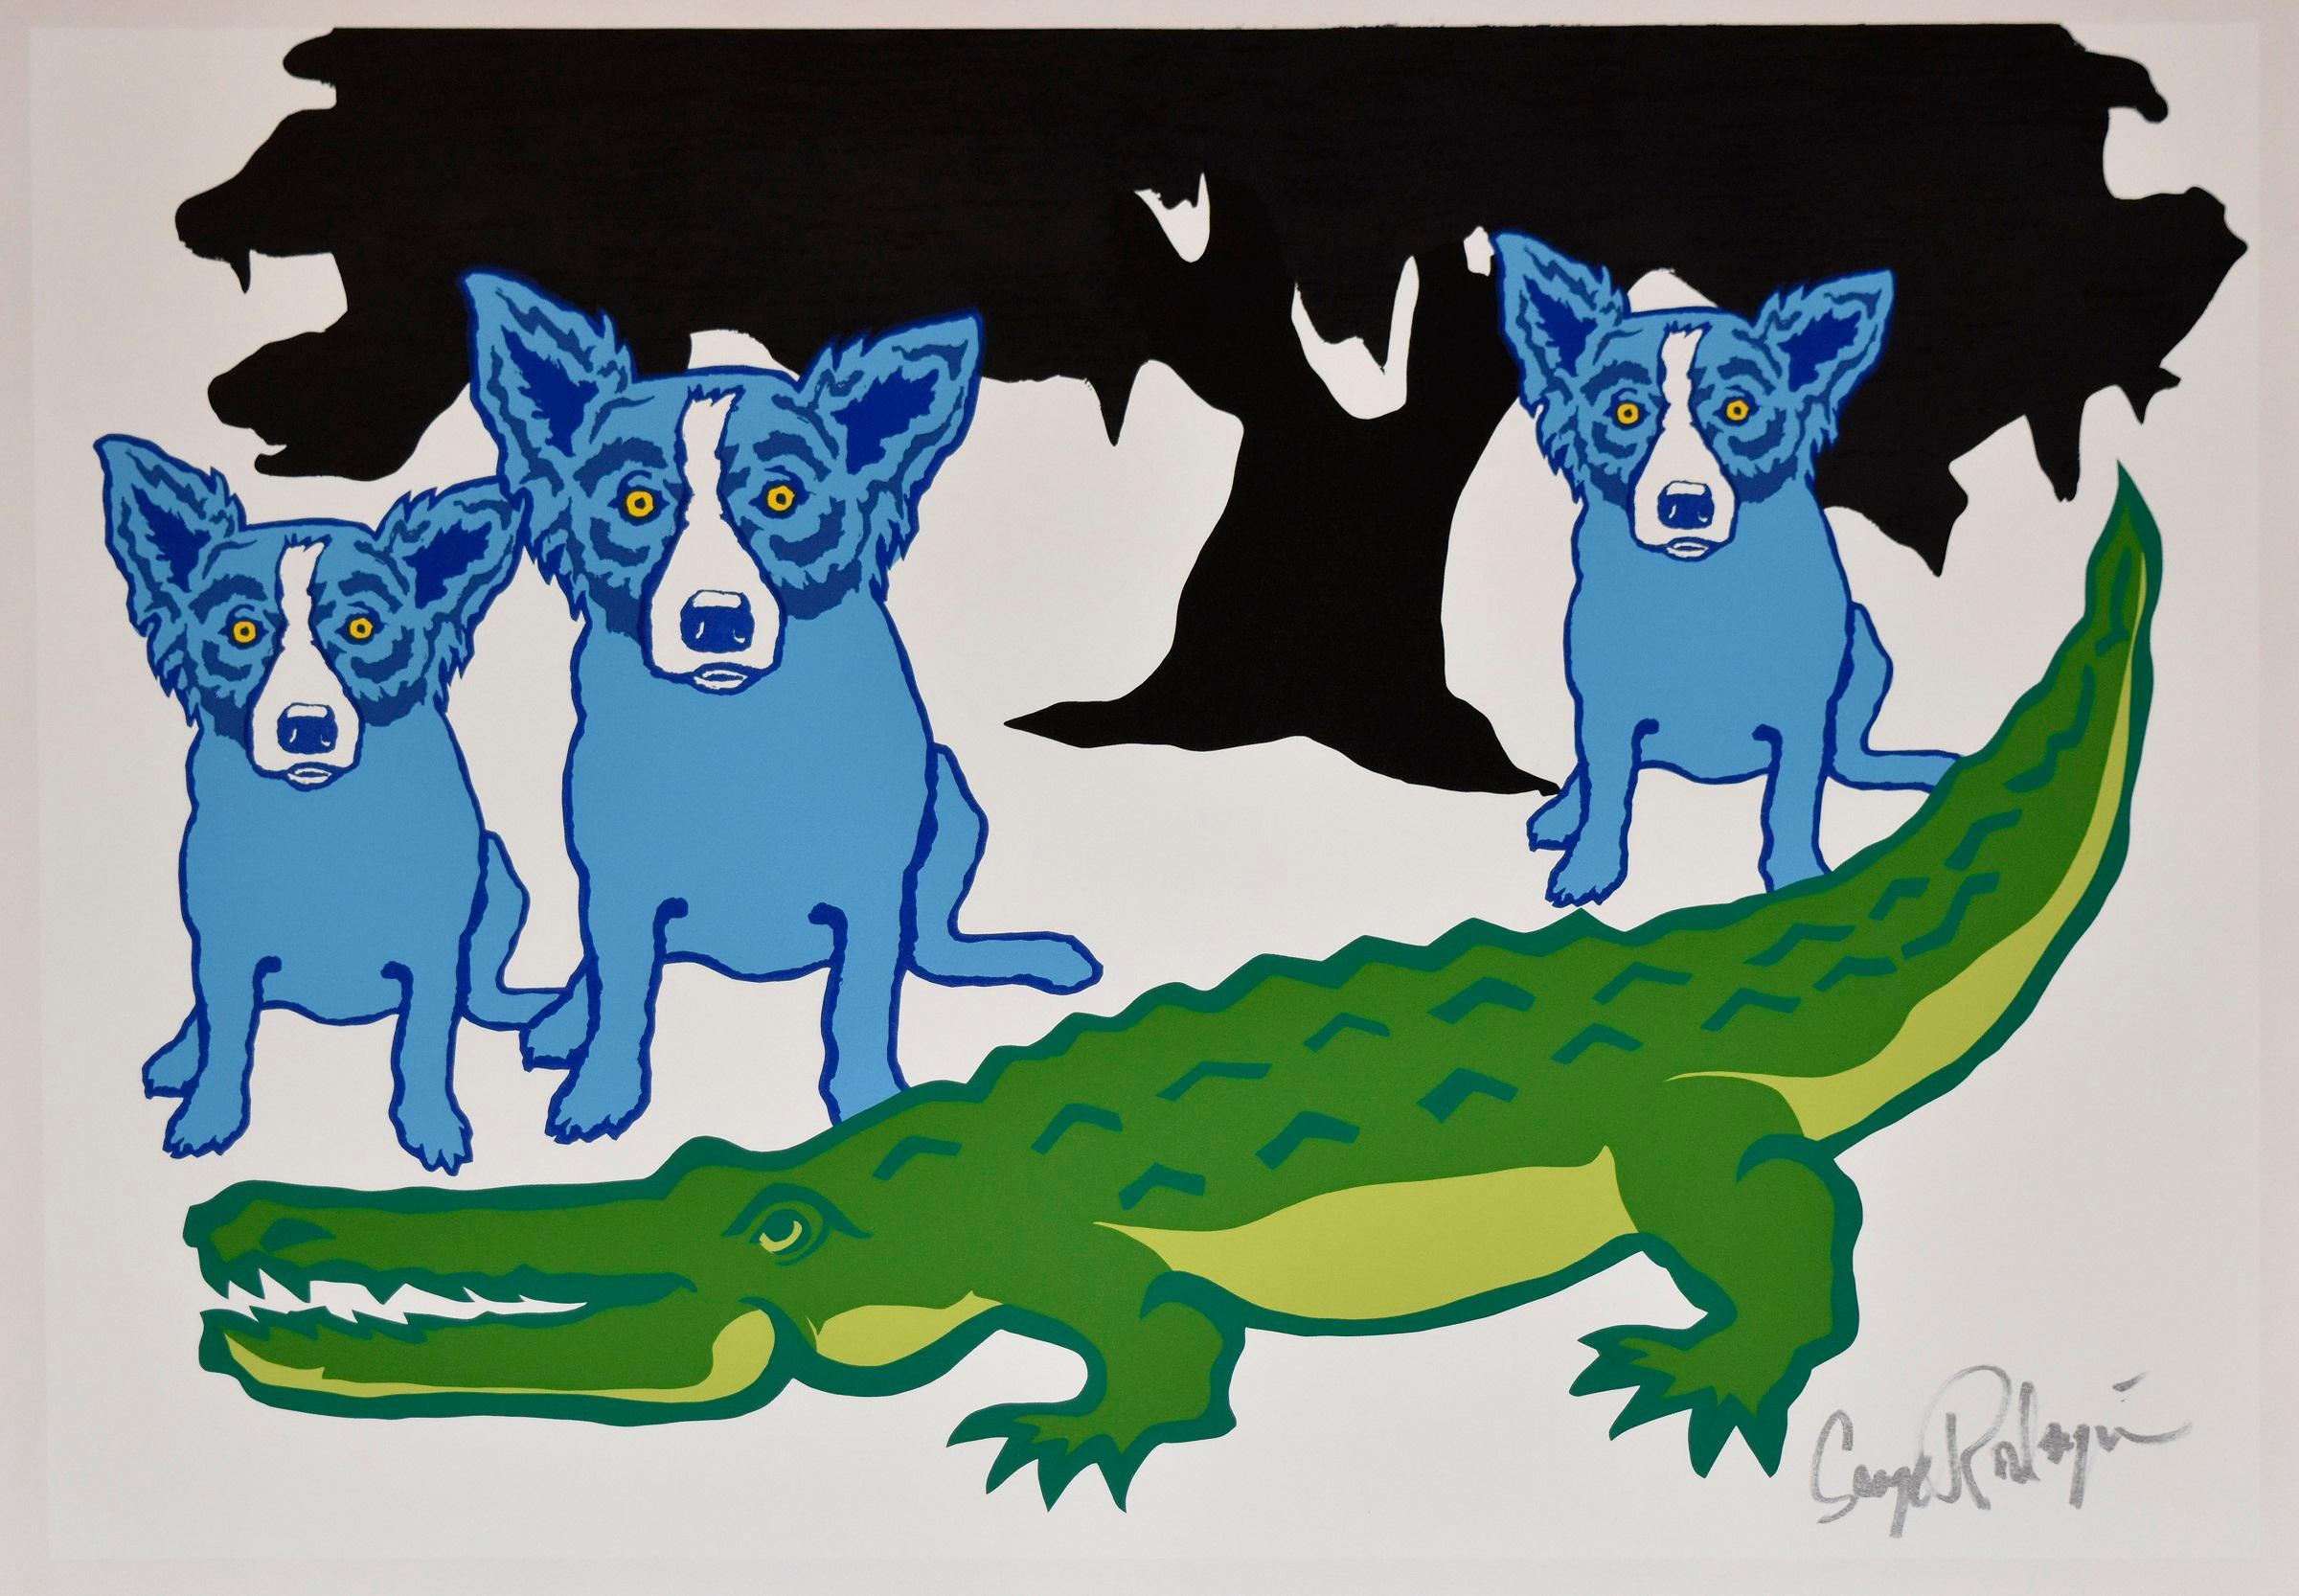 George Rodrigue Animal Print - Later Gator - White - Signed Silkscreen Print Blue Dog